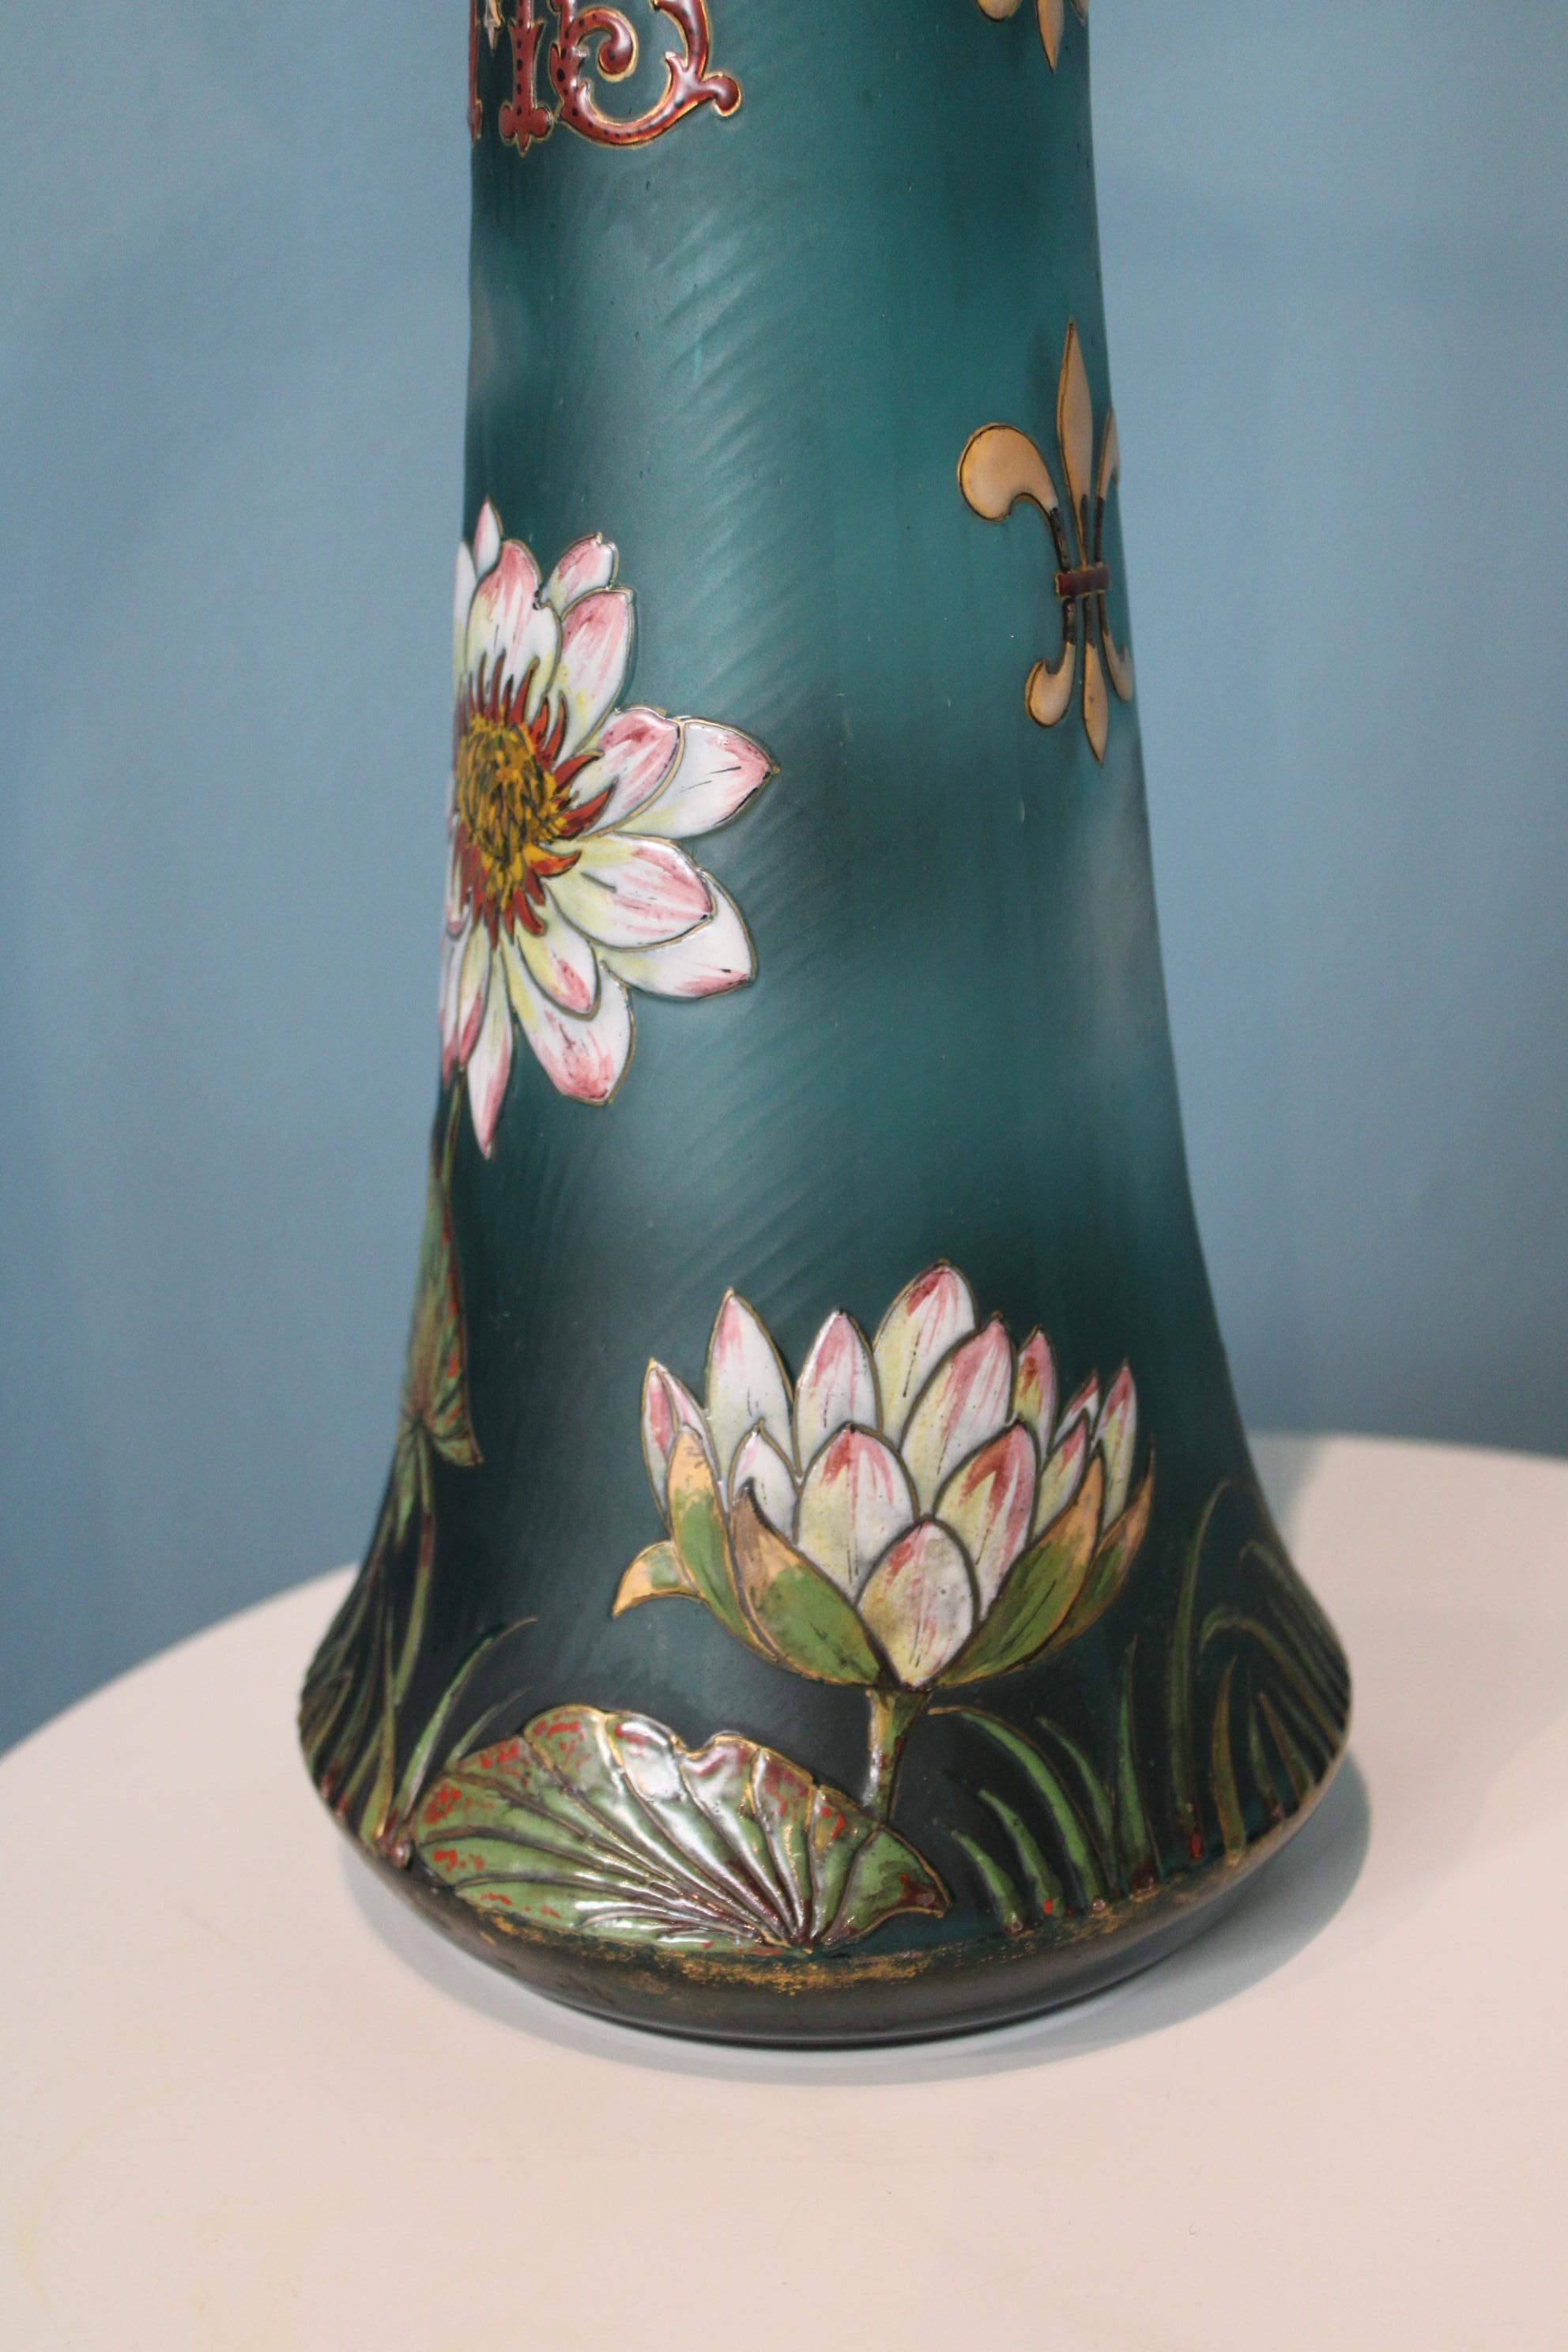 Glass Burgun, Schverer & Cie glass vase, France